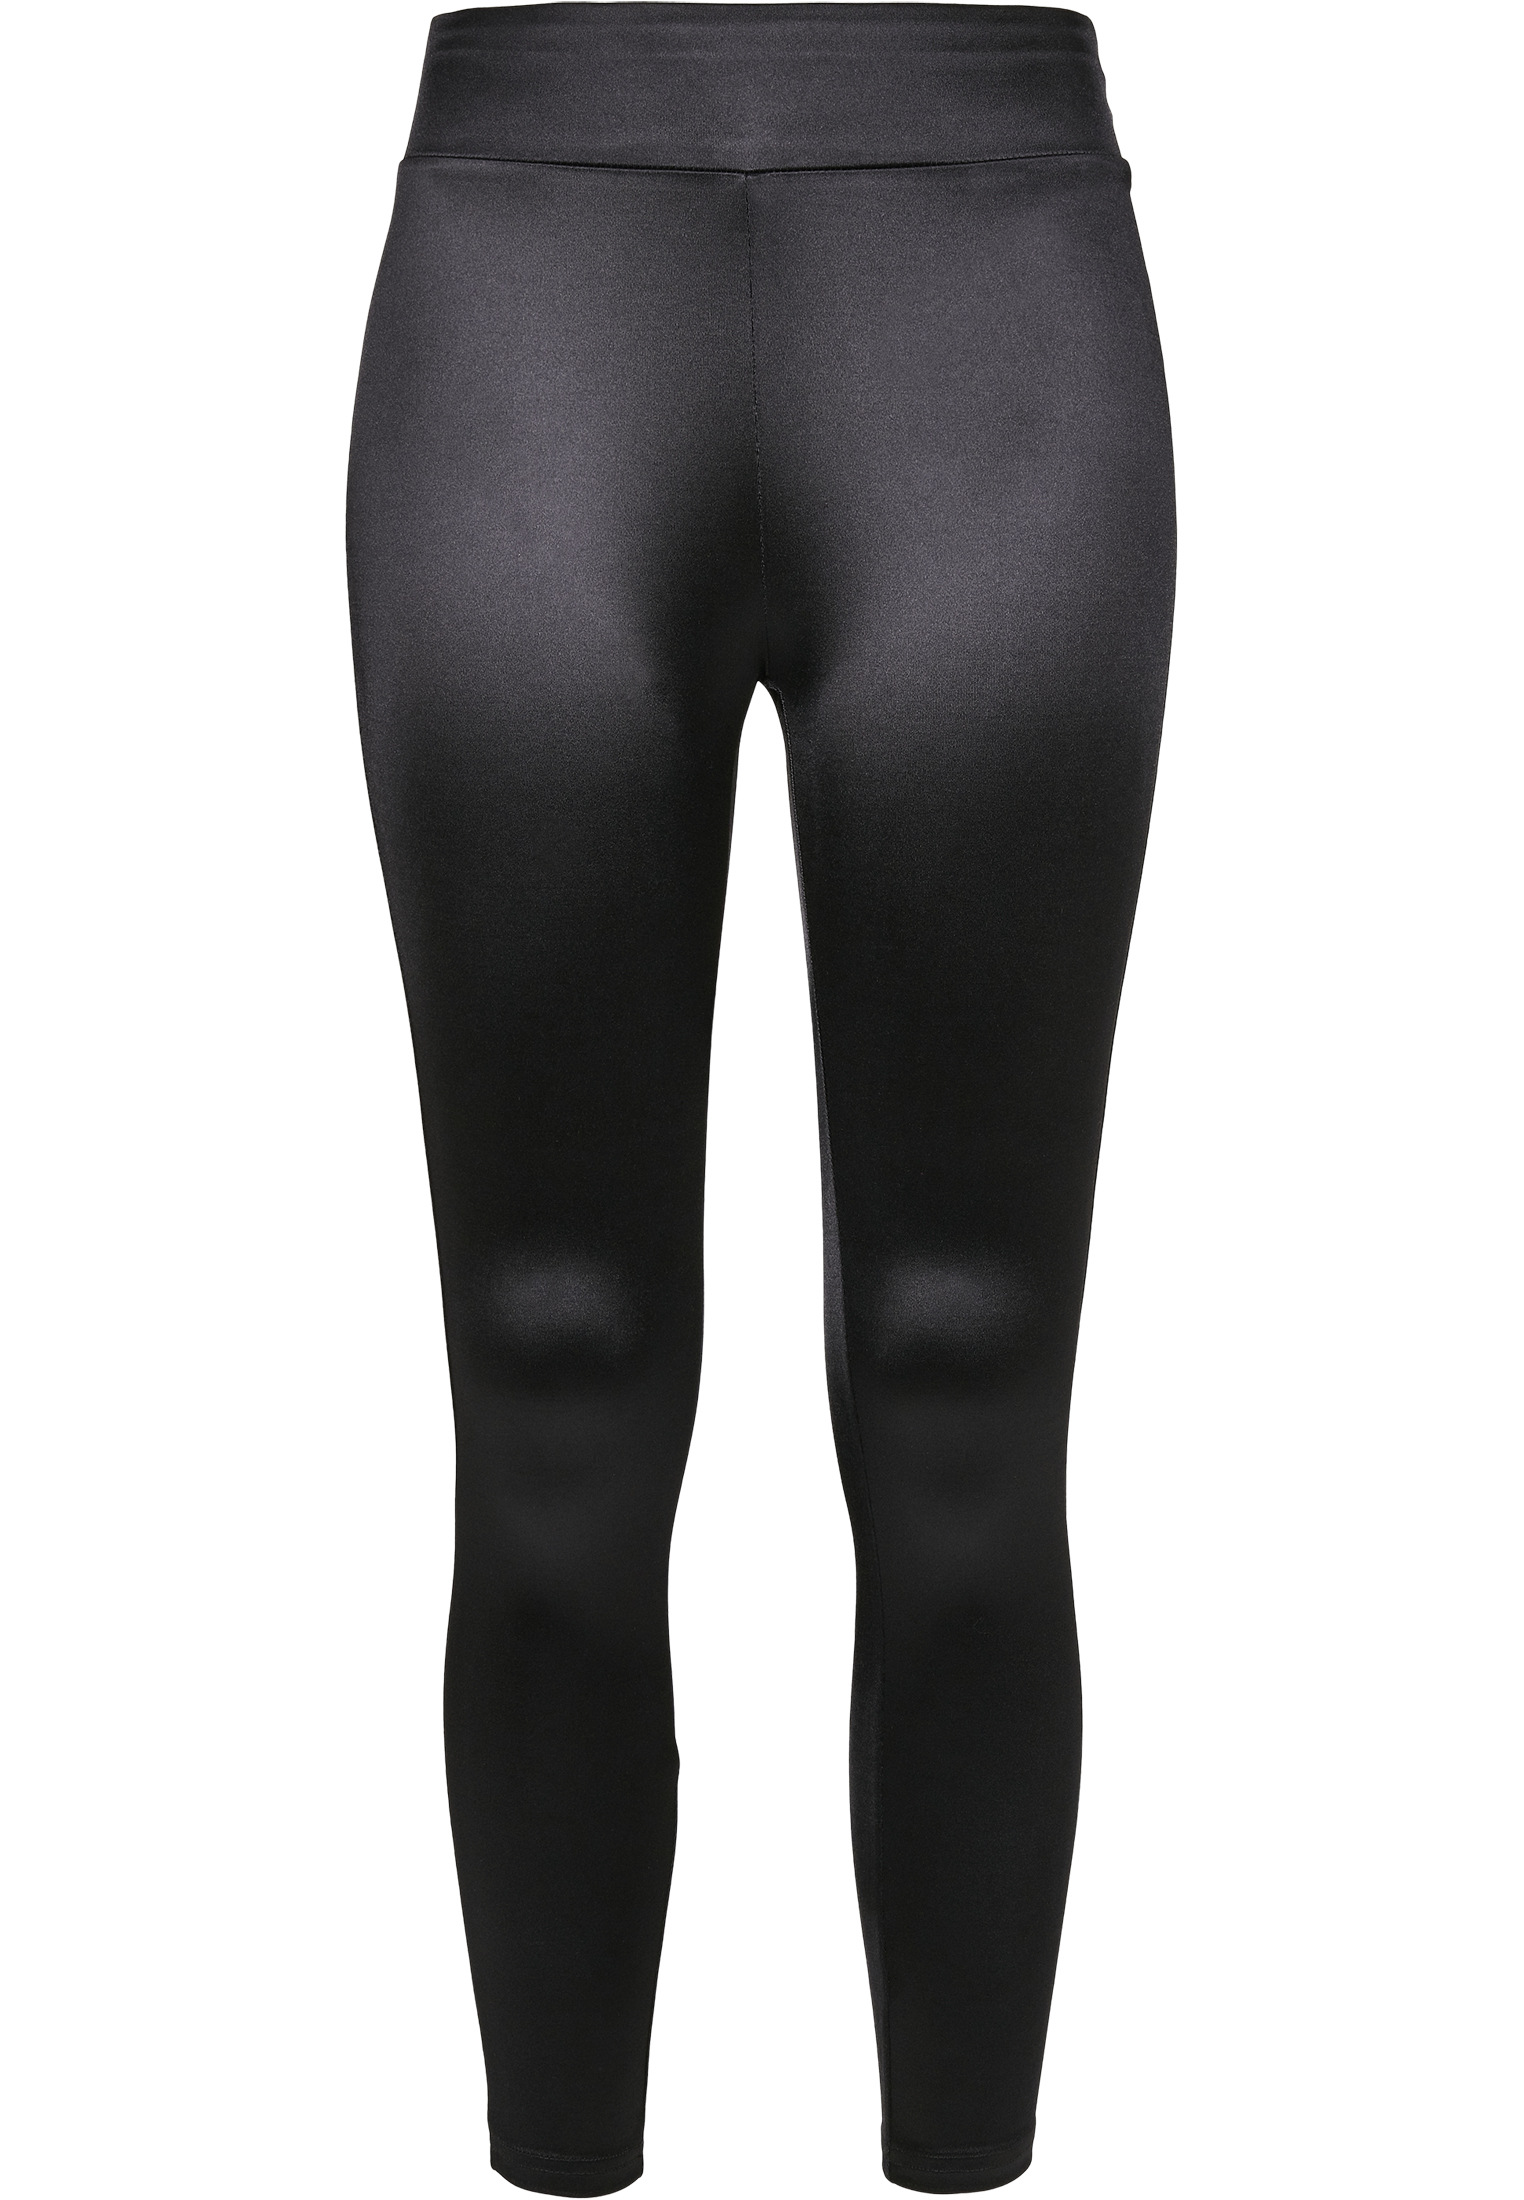 UC Ladies / Ladies Highwaist Shiny Stripe Leggings black/black